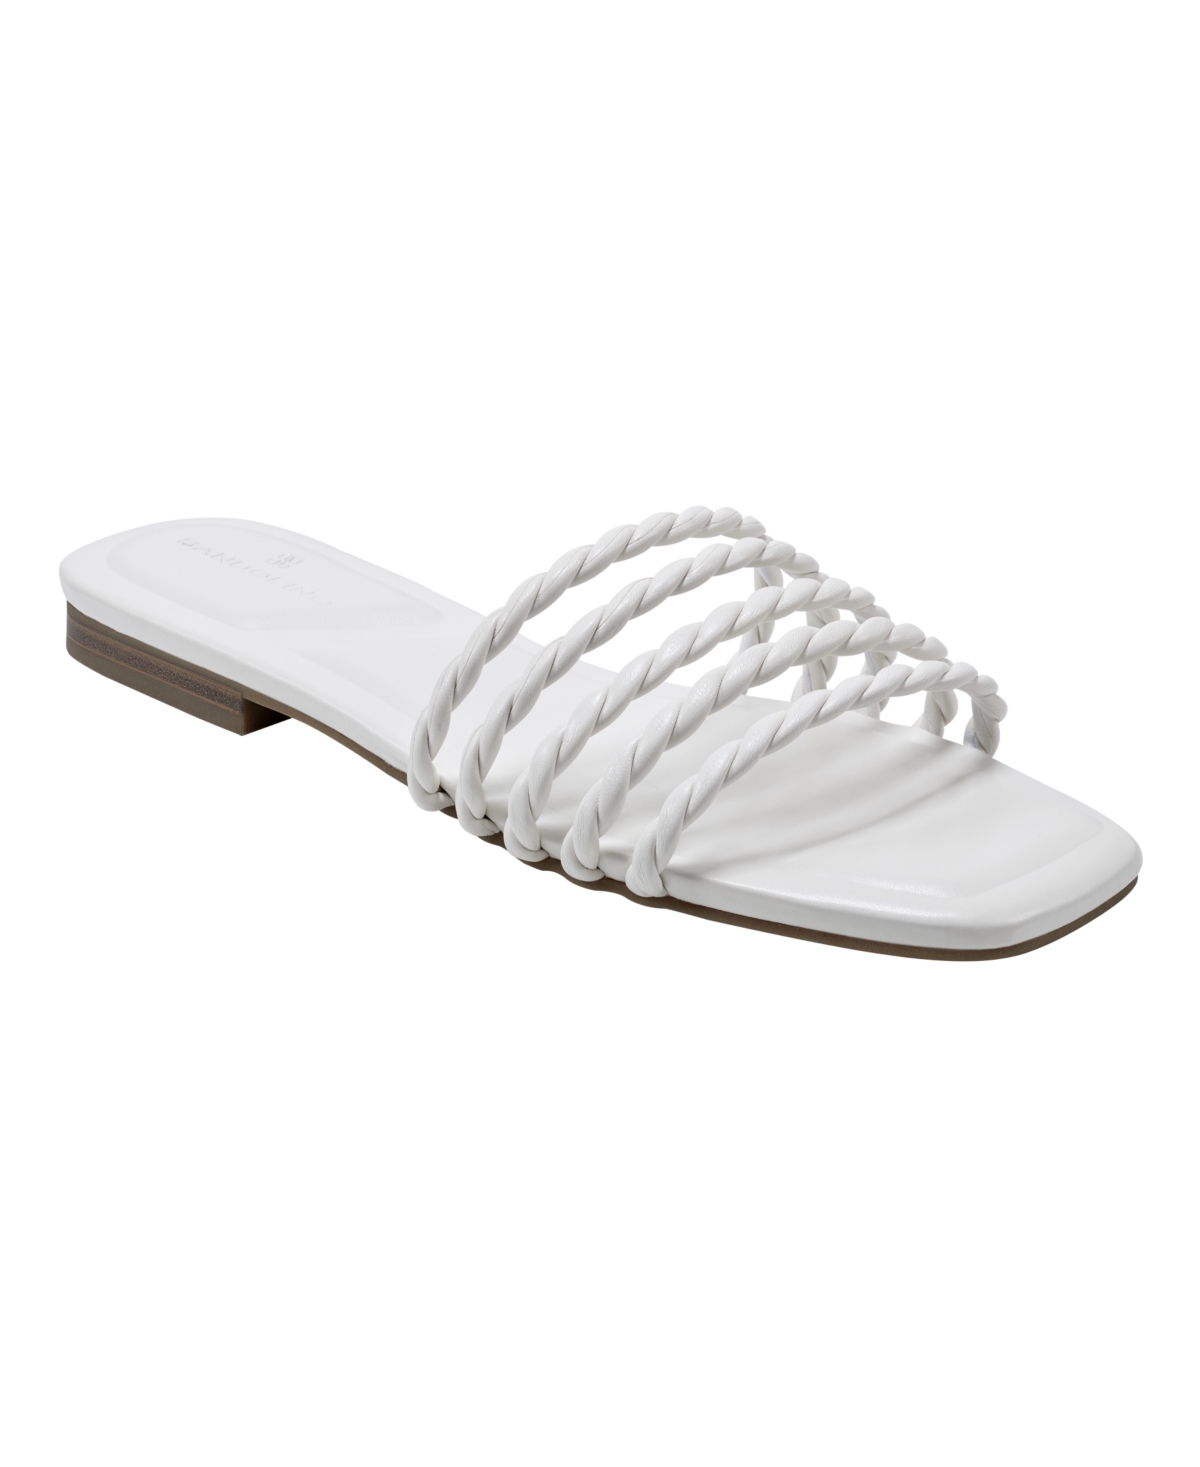 Bandolino Women's Soyou Open Toe Flat Slip On Sandals Women's Shoes